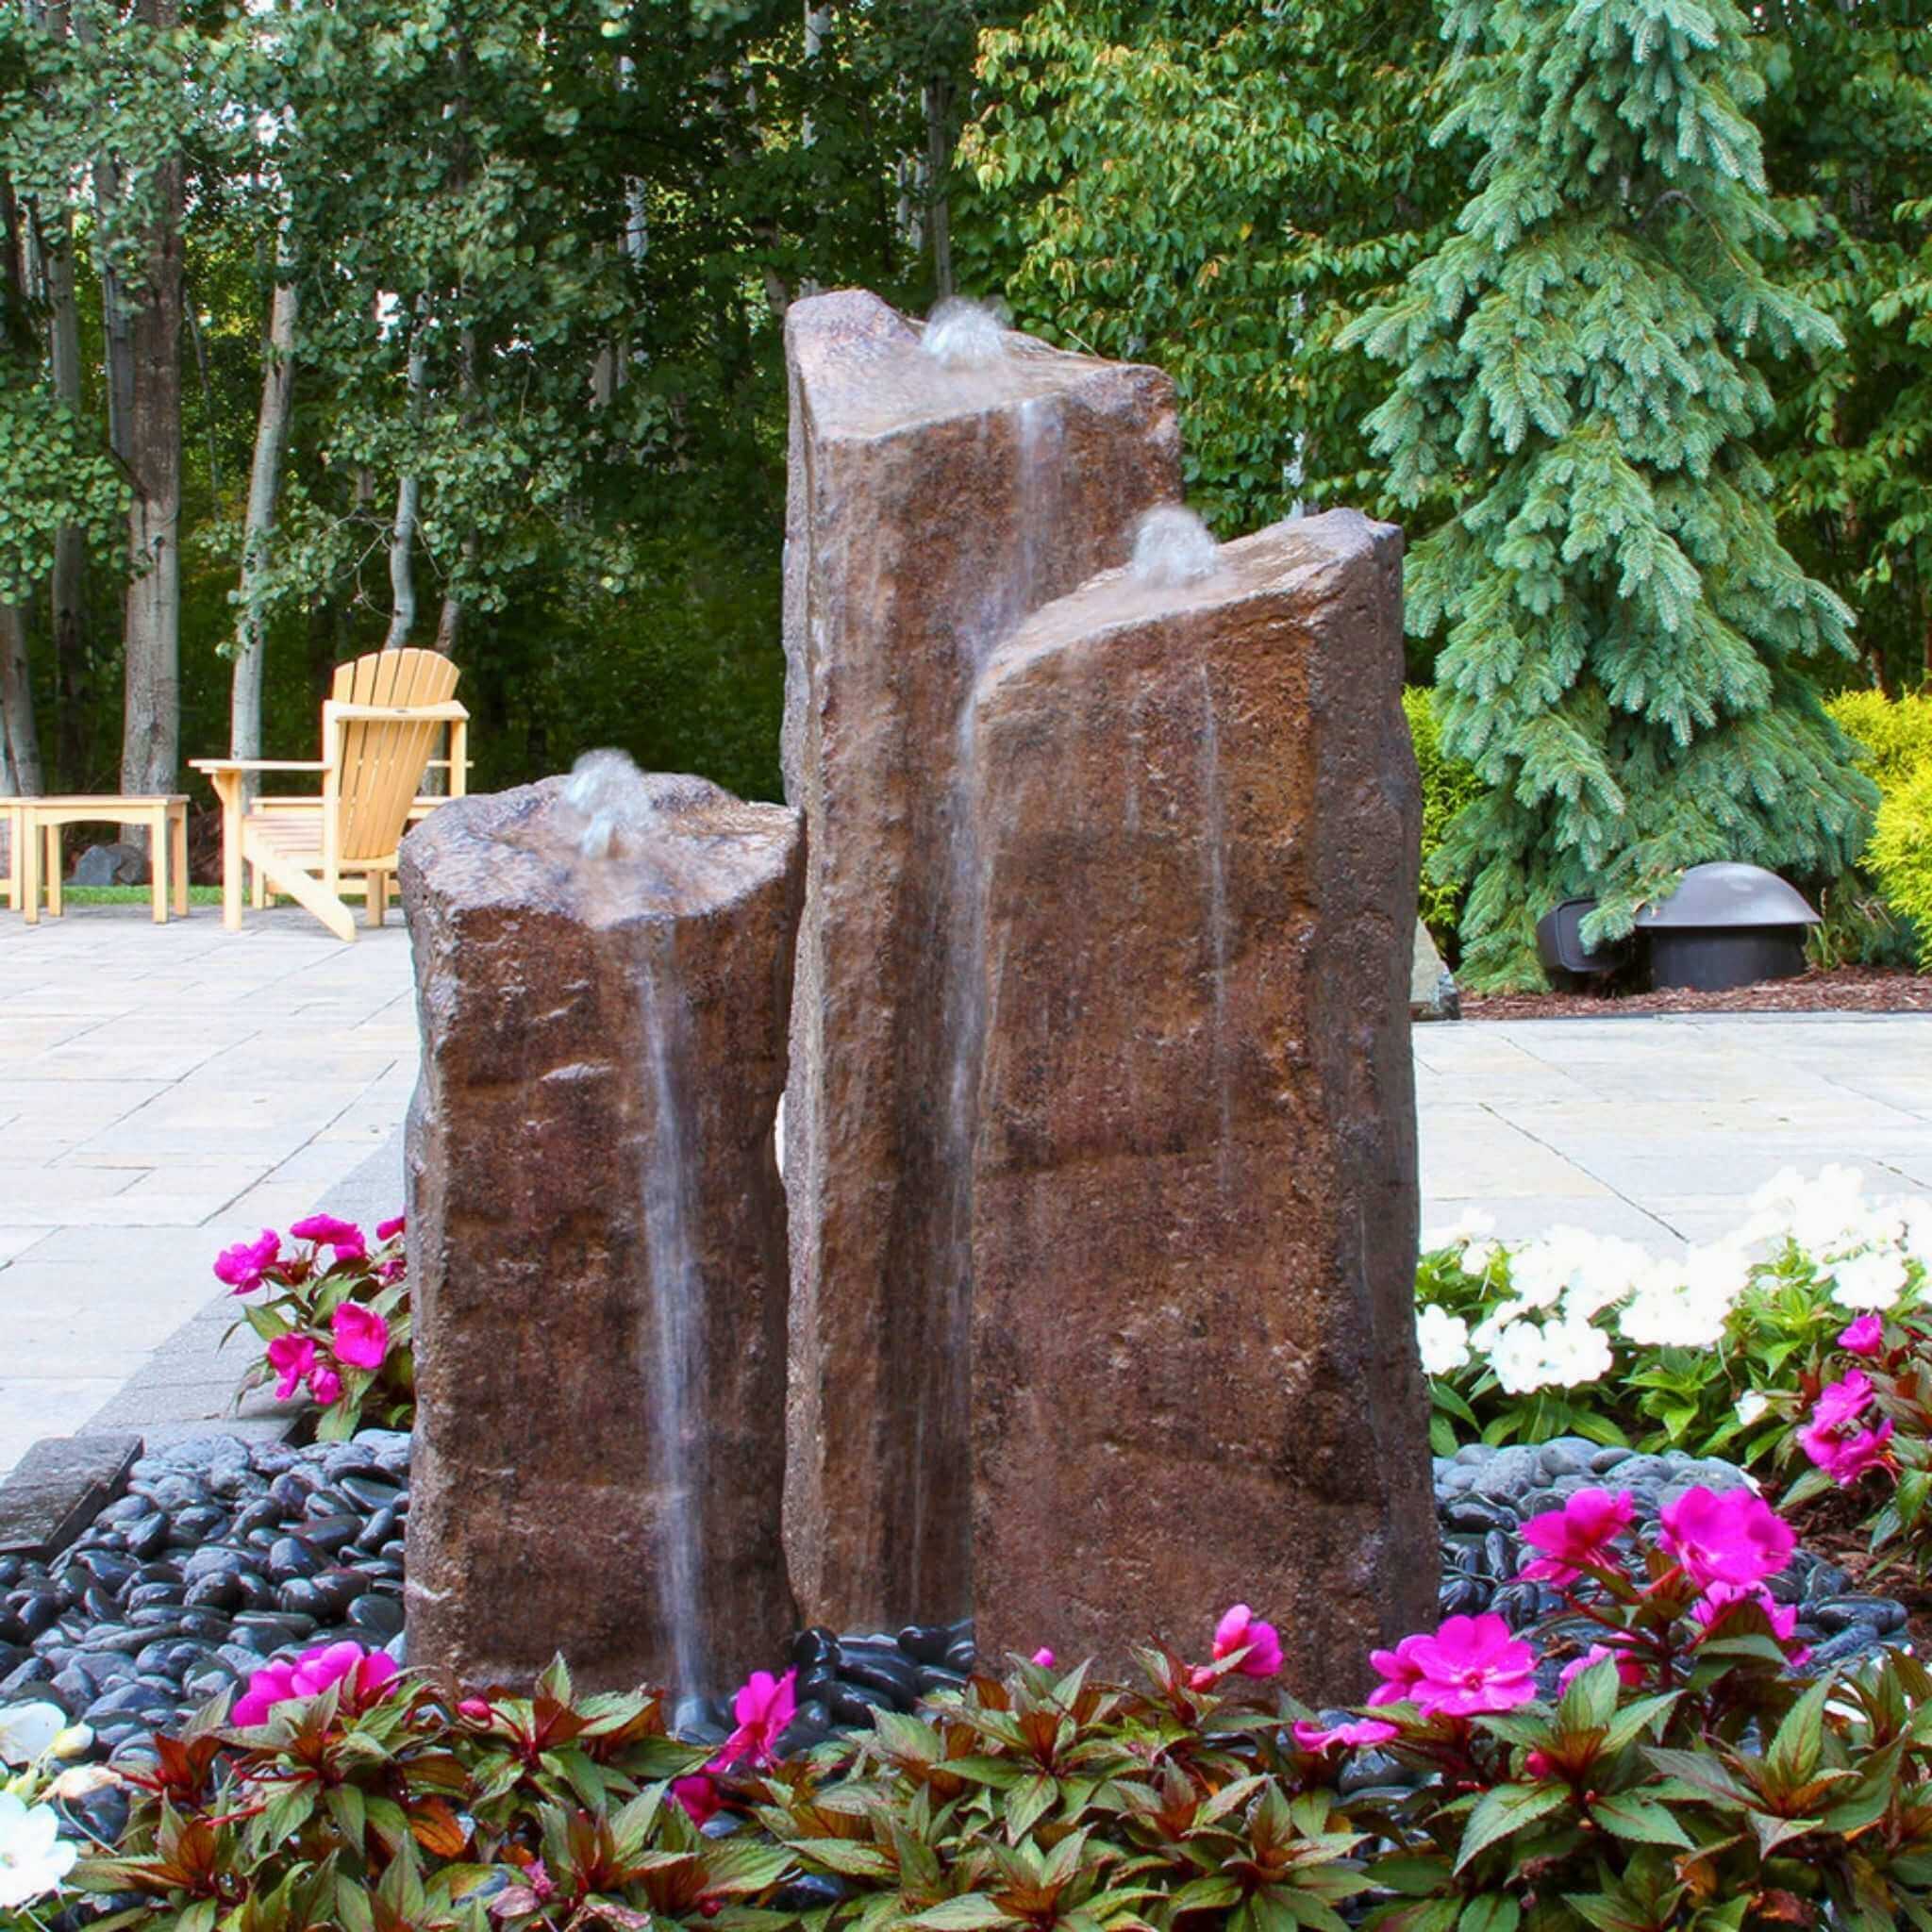 Triple "Basalt" GFRC 3-Boulder Fountain - Complete Kit - Blue Thumb